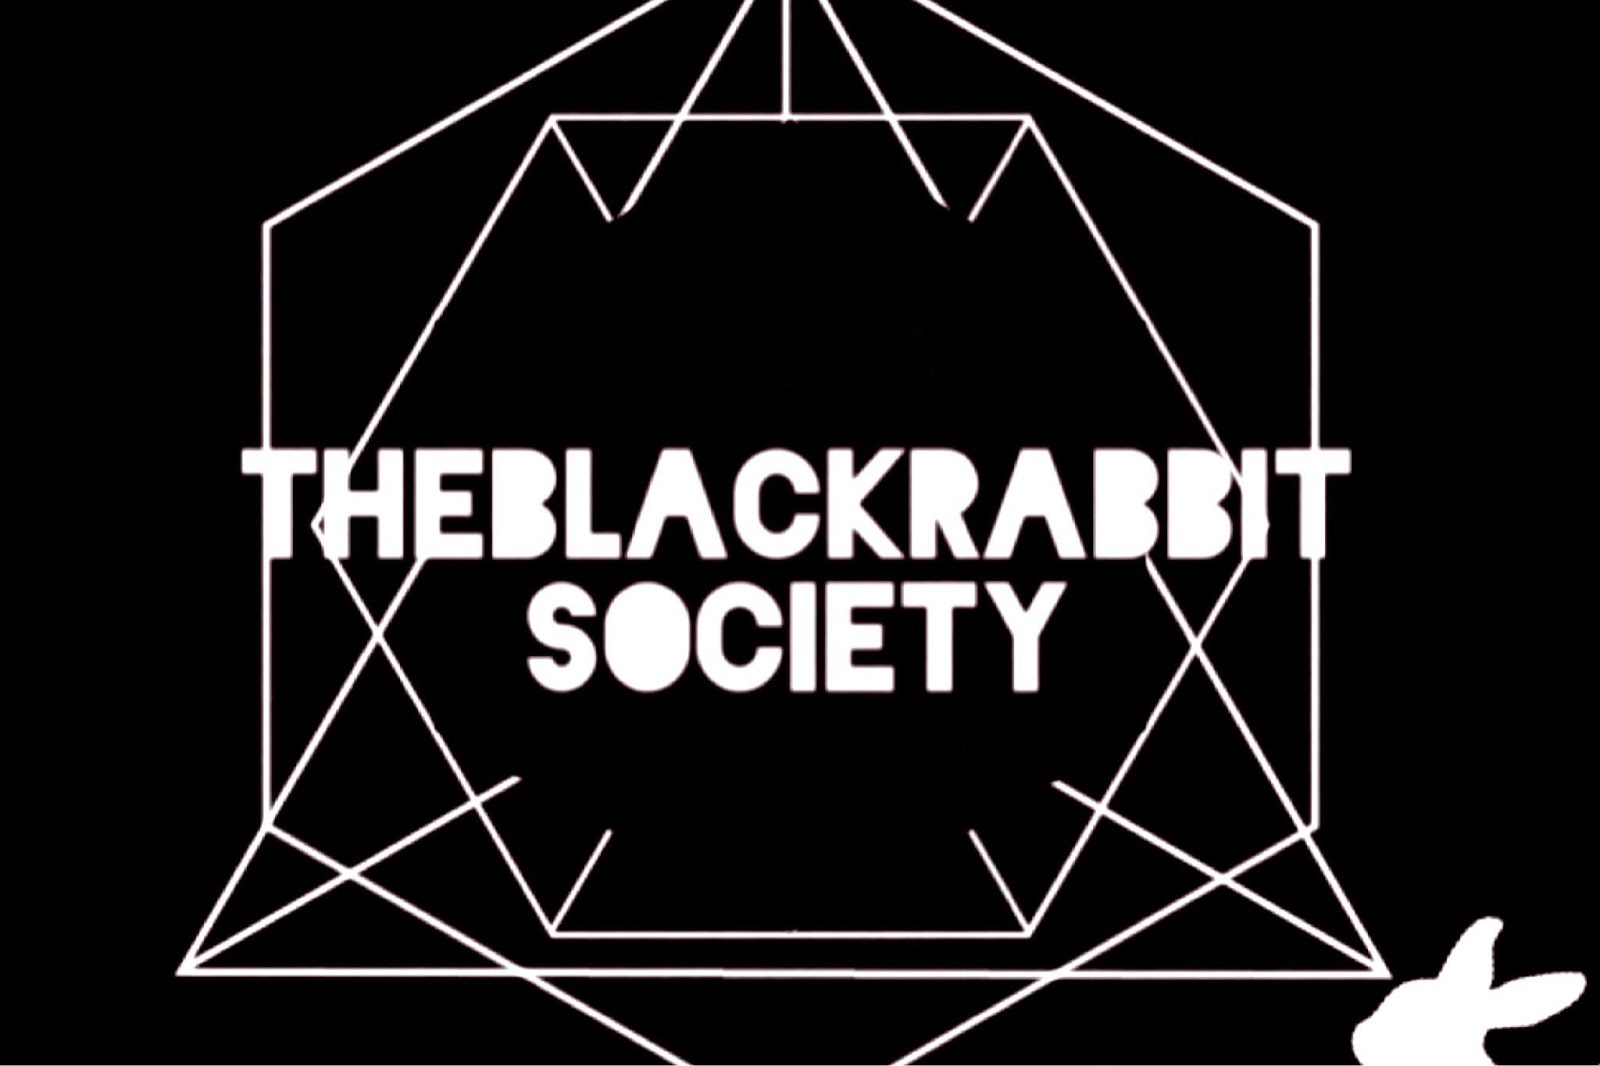 The Black Rabbit Society